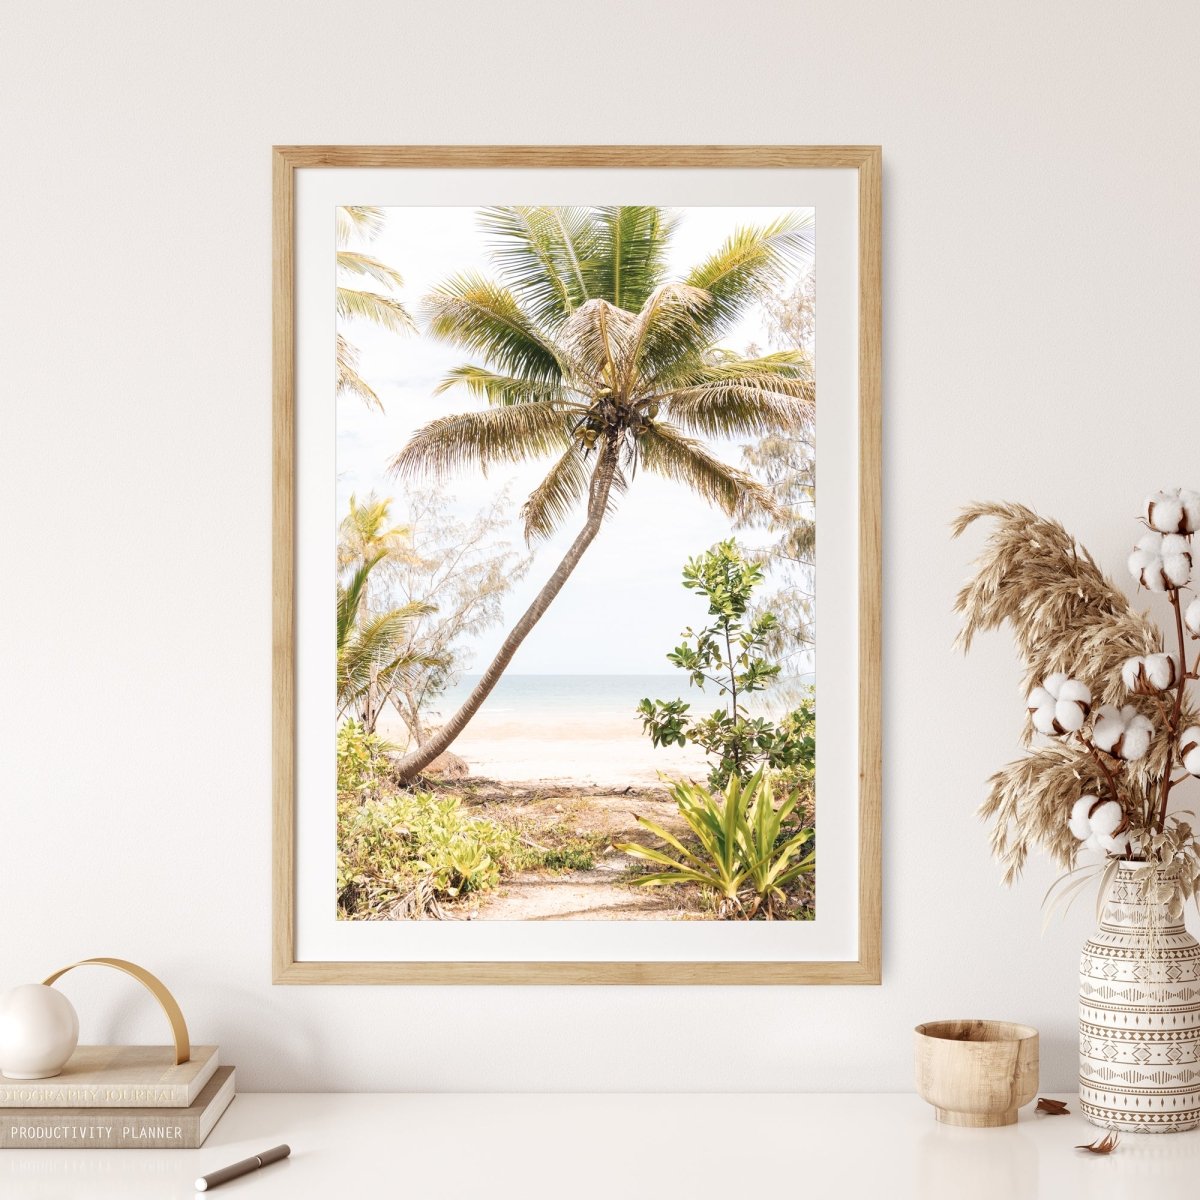 "Sun-Kissed Palms" Photography Print - Belinda Doyle - Australian Photographer & Resin Artist